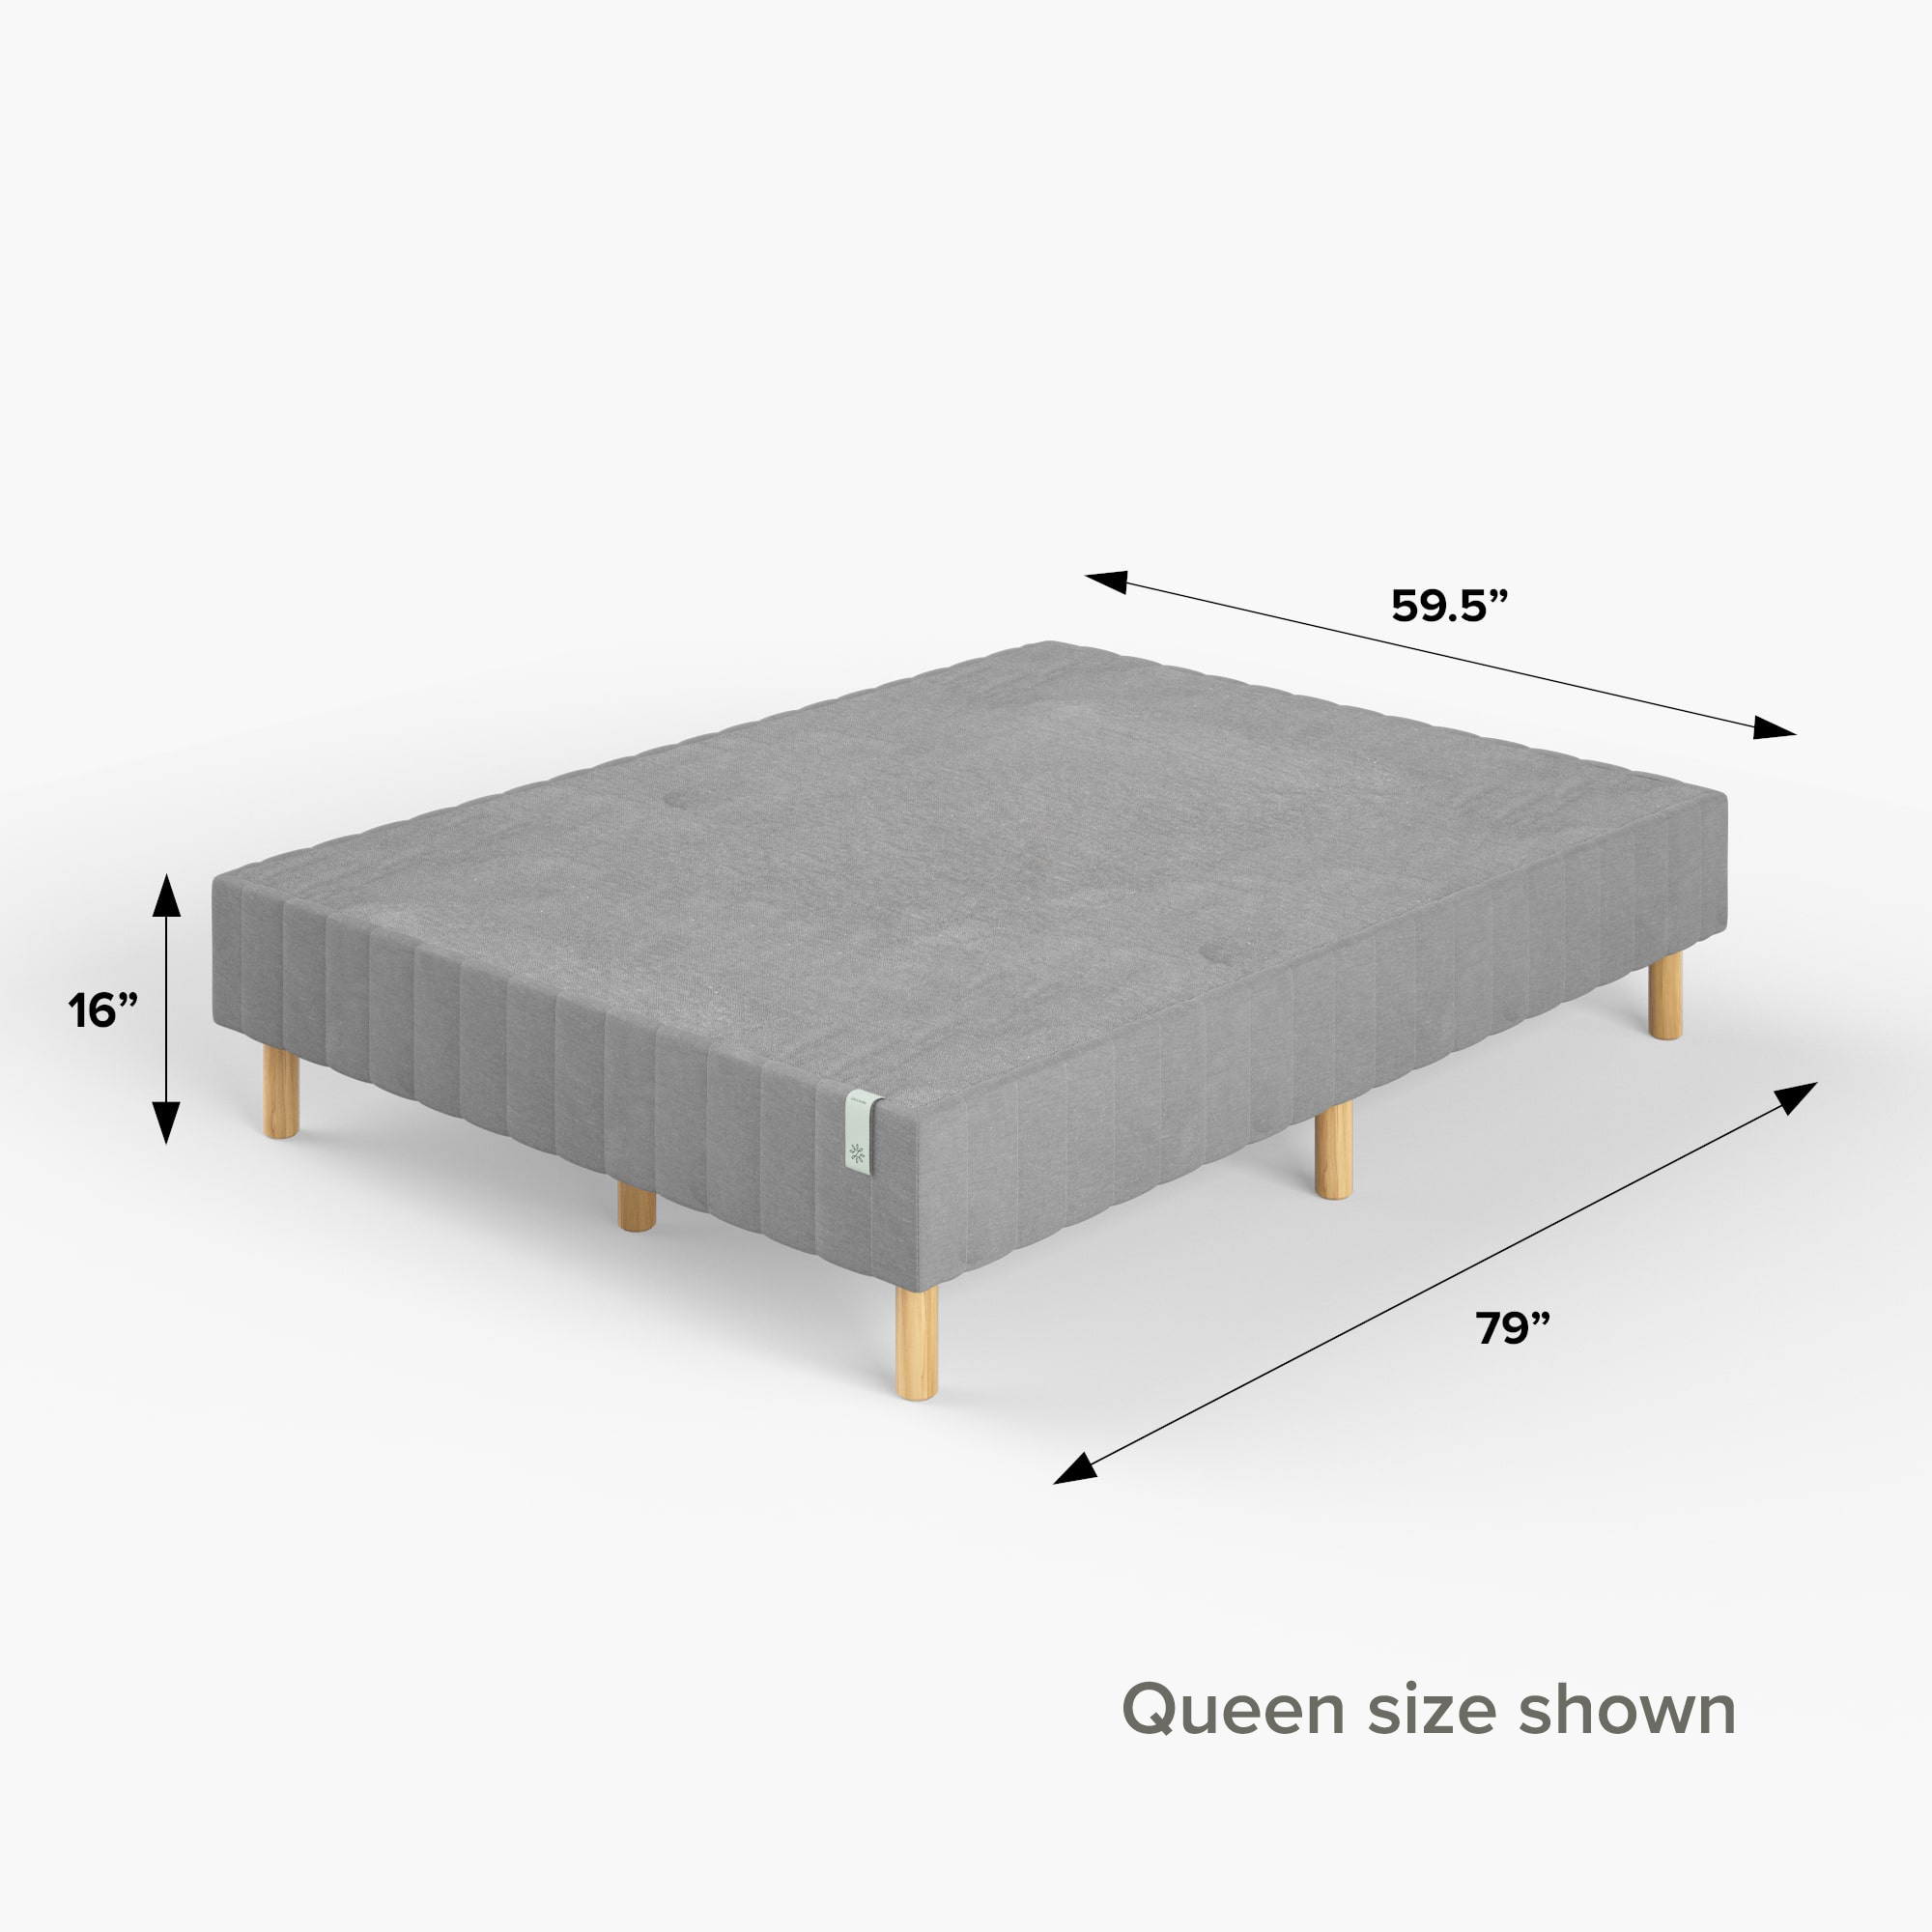 2019 GOOD DESIGN™ Award Winner - Justina Metal Mattress Foundation 16 inch queen size dimensions shown